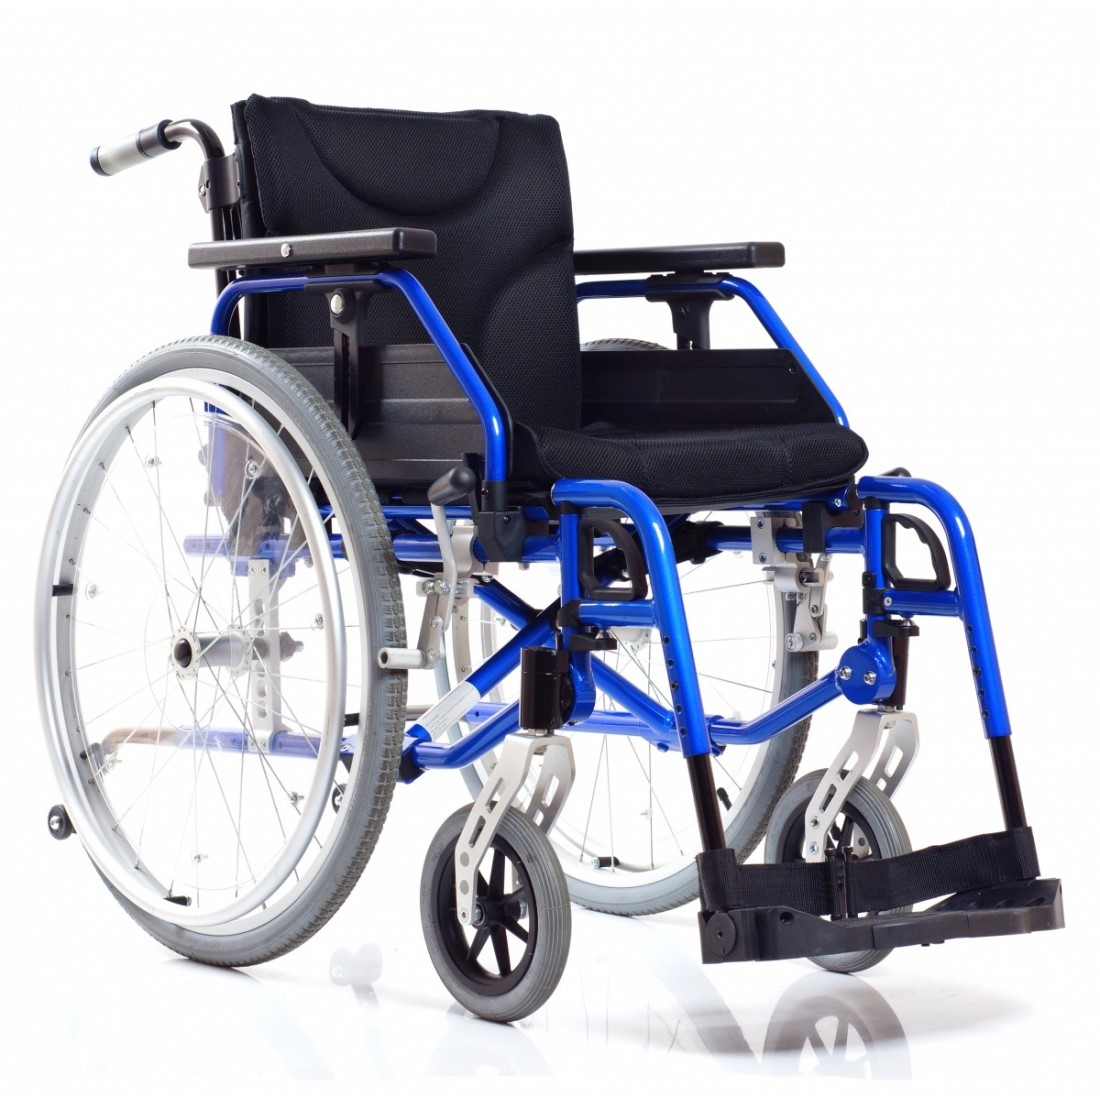 Коляска ортоника цена. Инвалидное кресло-коляска Ортоника. Инвалидное кресло Ортоника. Кресло-коляска Ortonica trend 40. Кресло-коляска Barry a8 t.